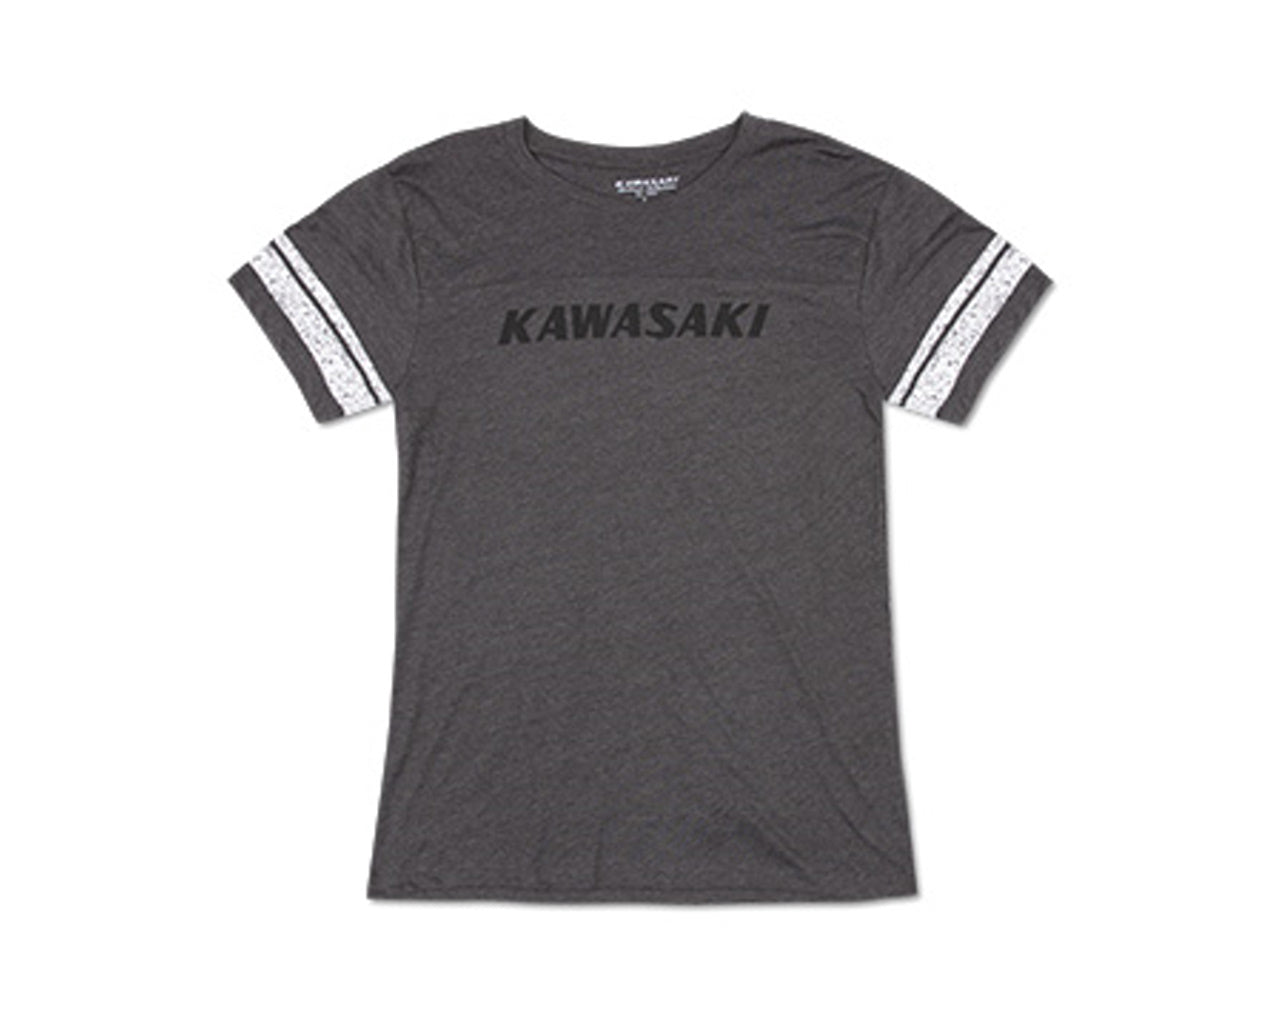 Kawasaki Hertiage Race Day Gray T-Shirt w/white stripes on sleeves 